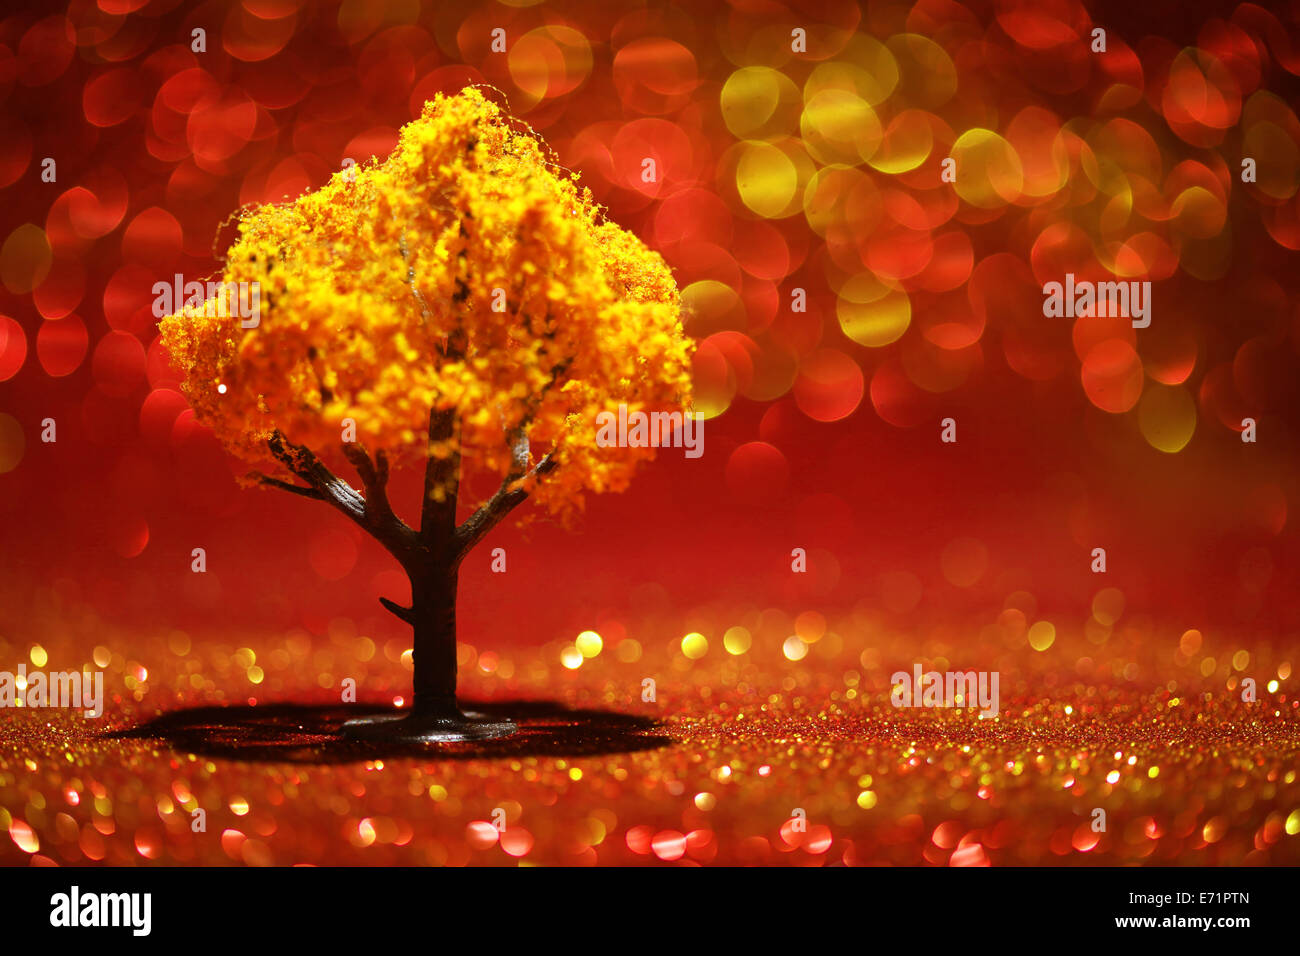 Herbst Hintergrund Stockfoto